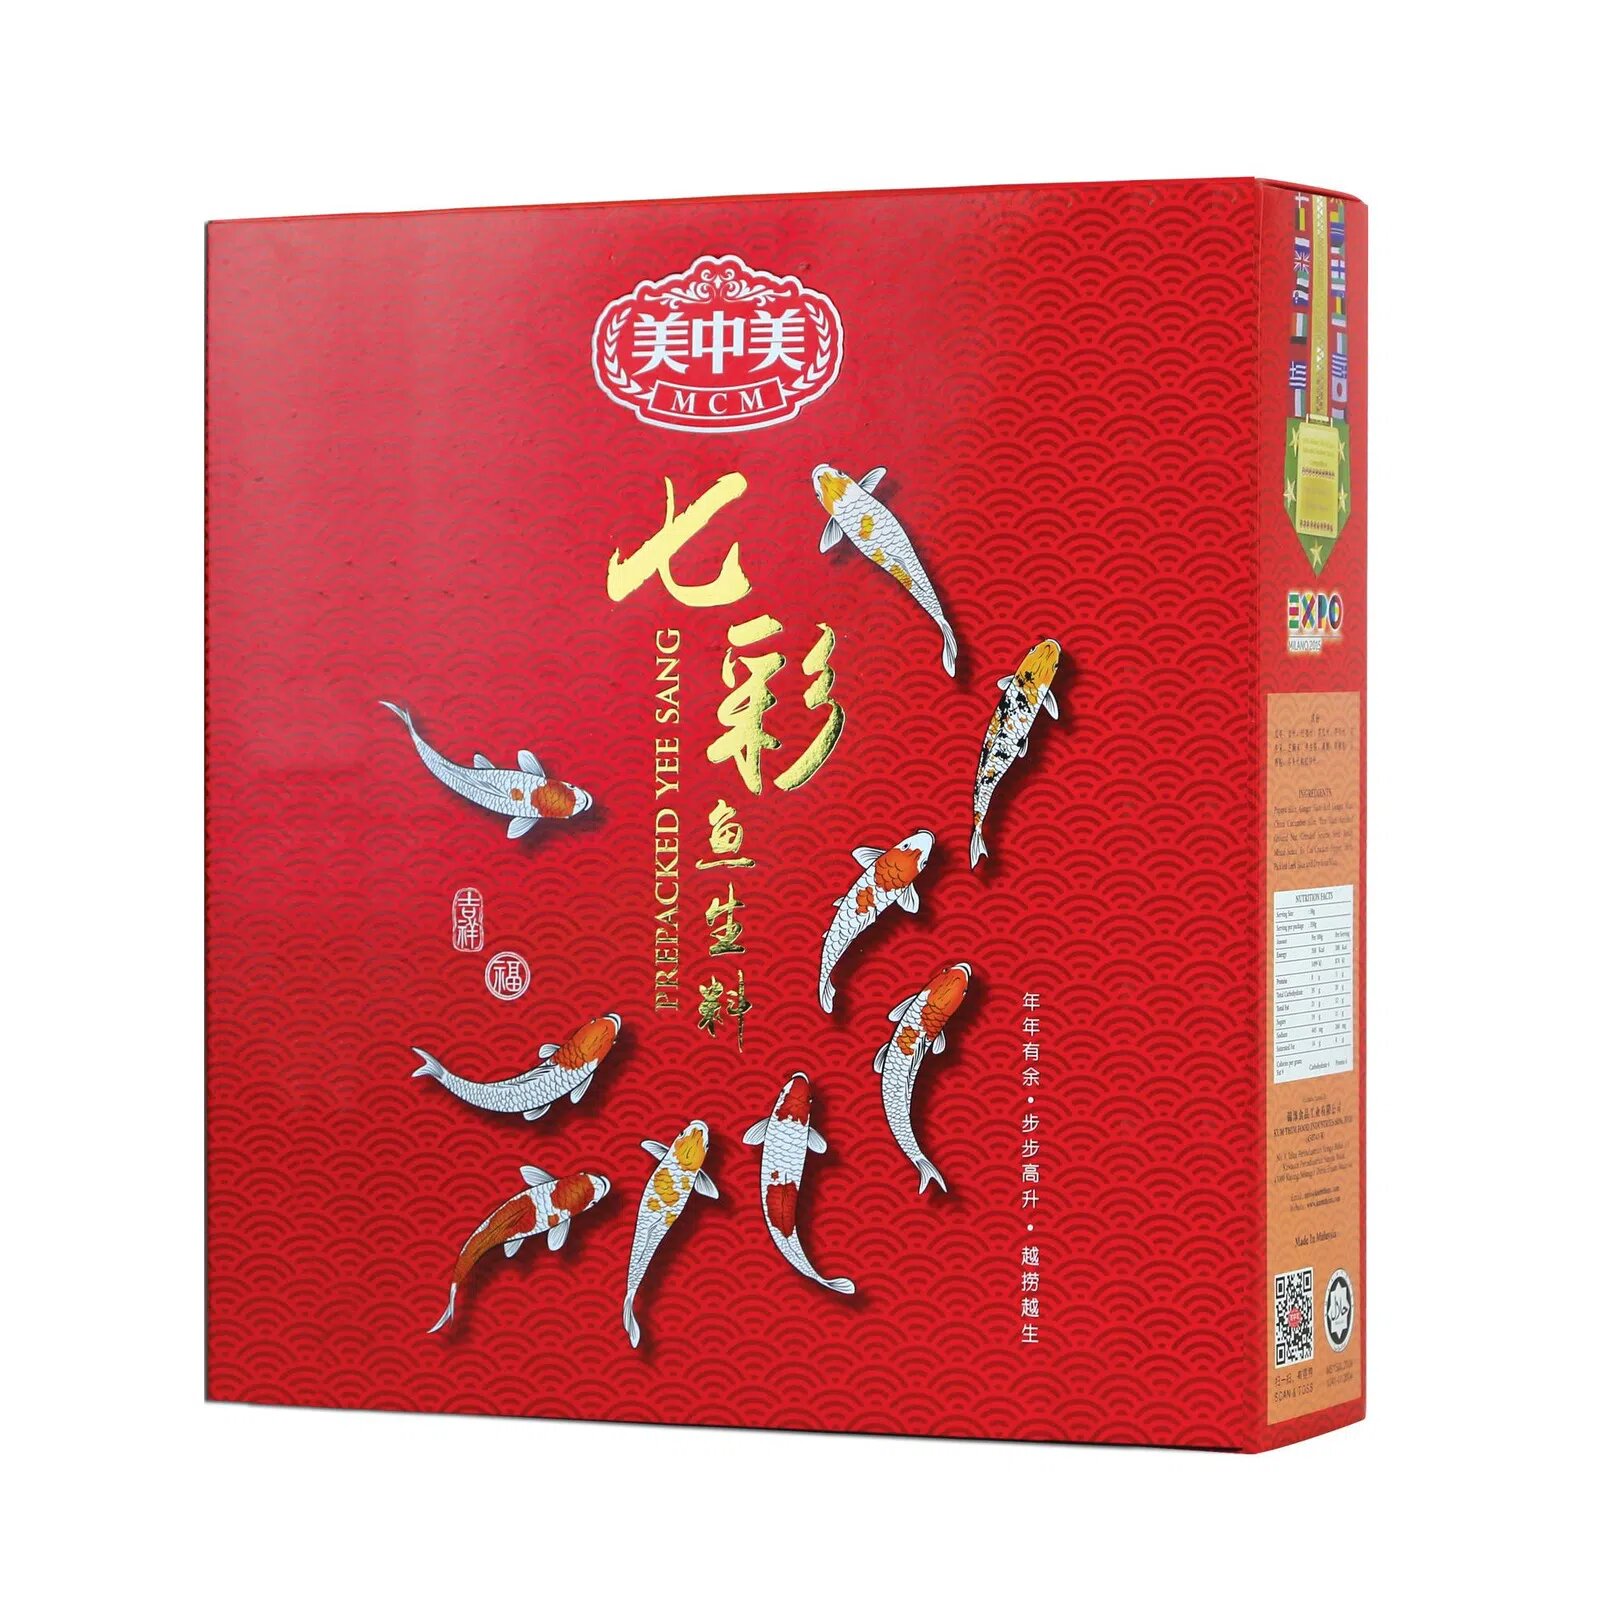 MCM Yee Sang - CNY Red Box Yu Sheng (Small)